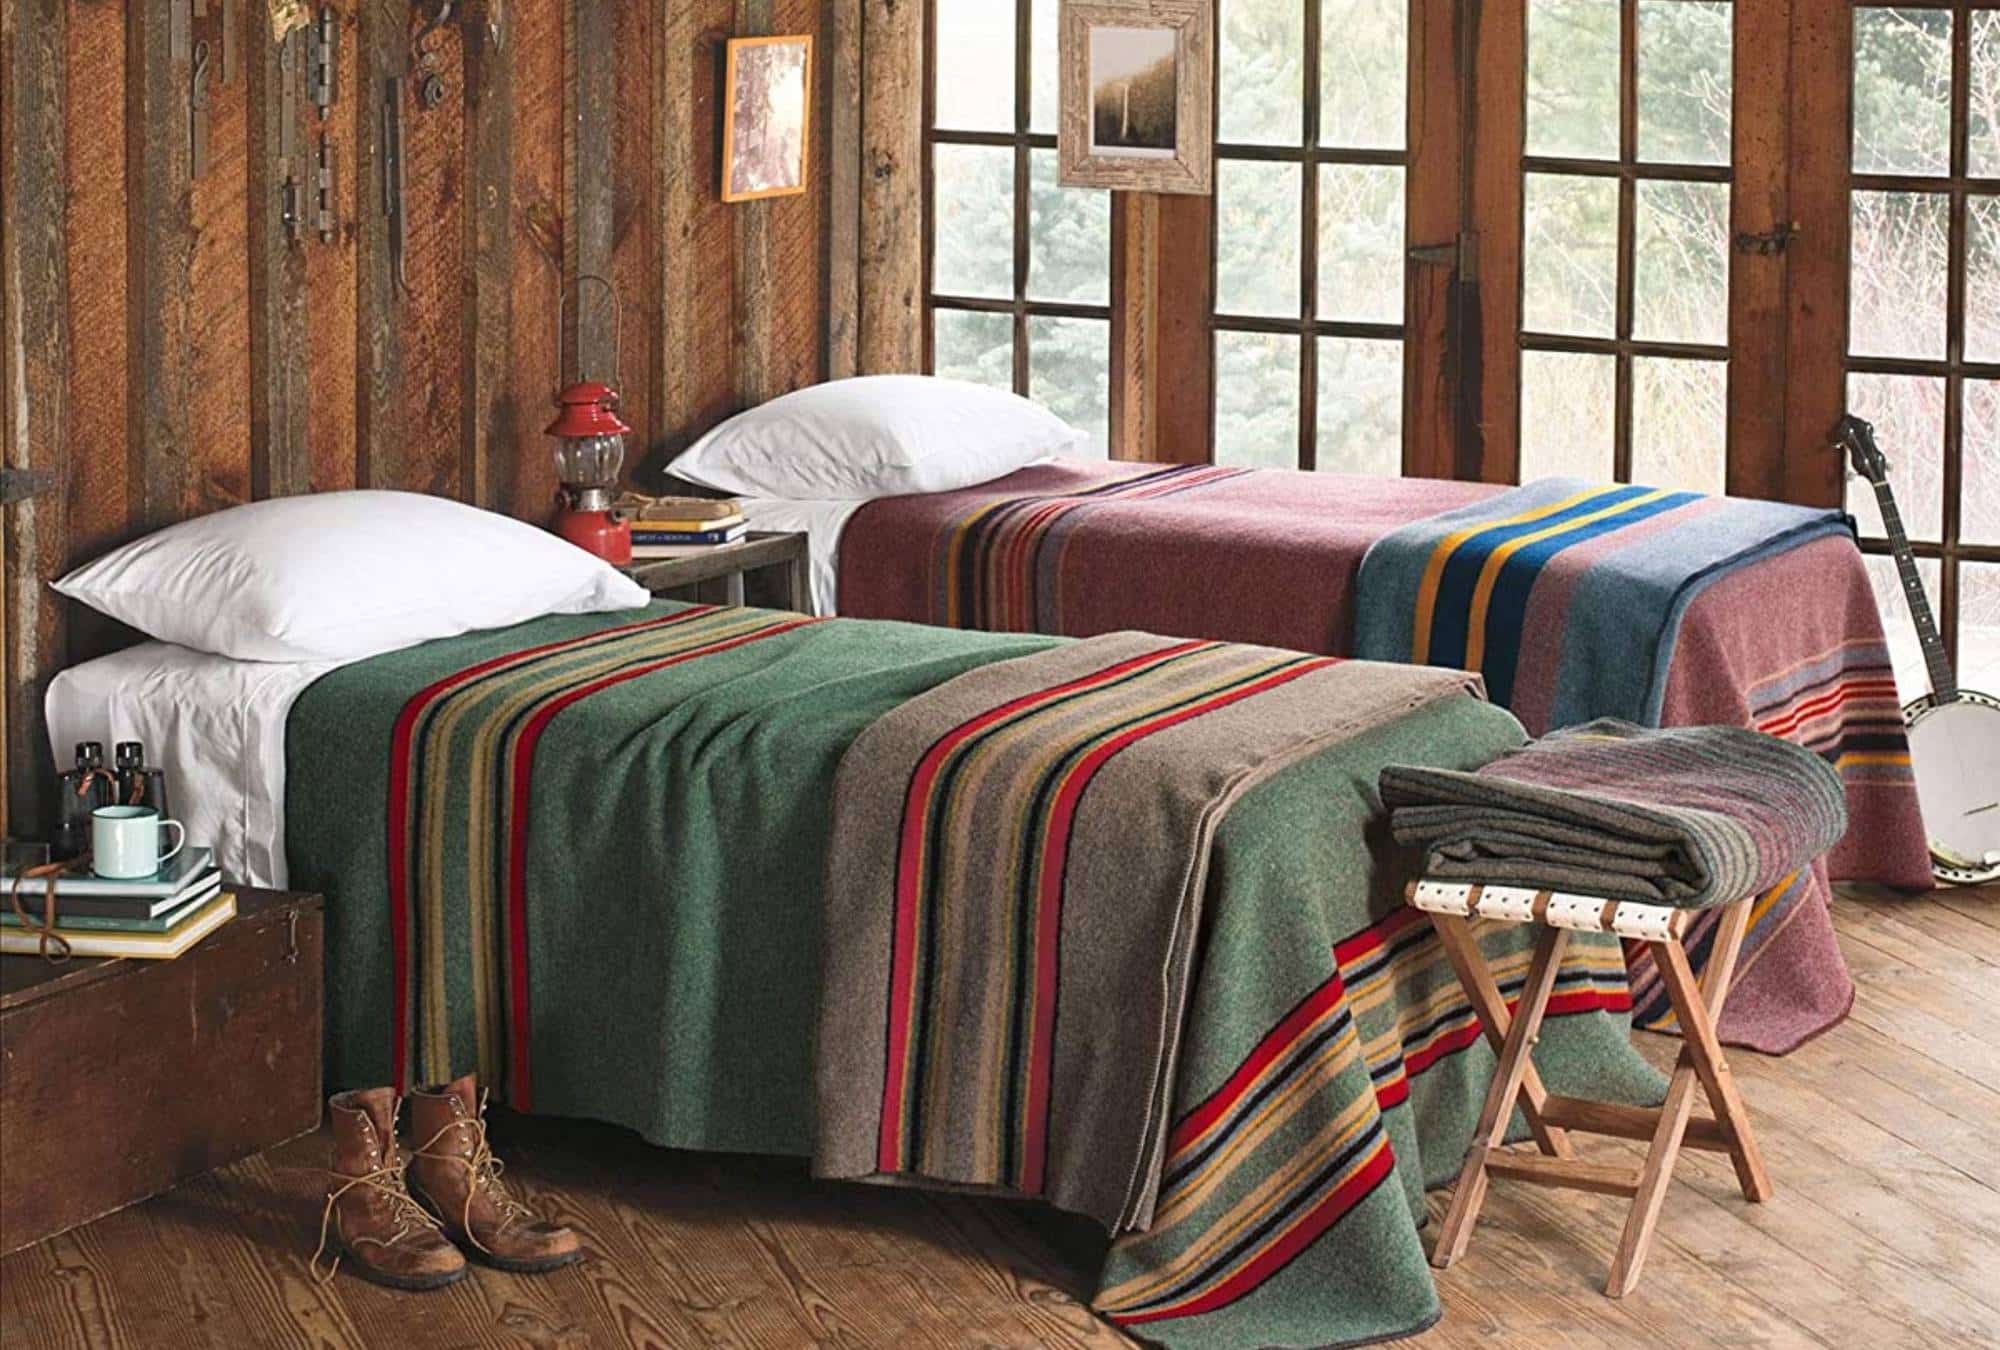 a log cabin bedroom